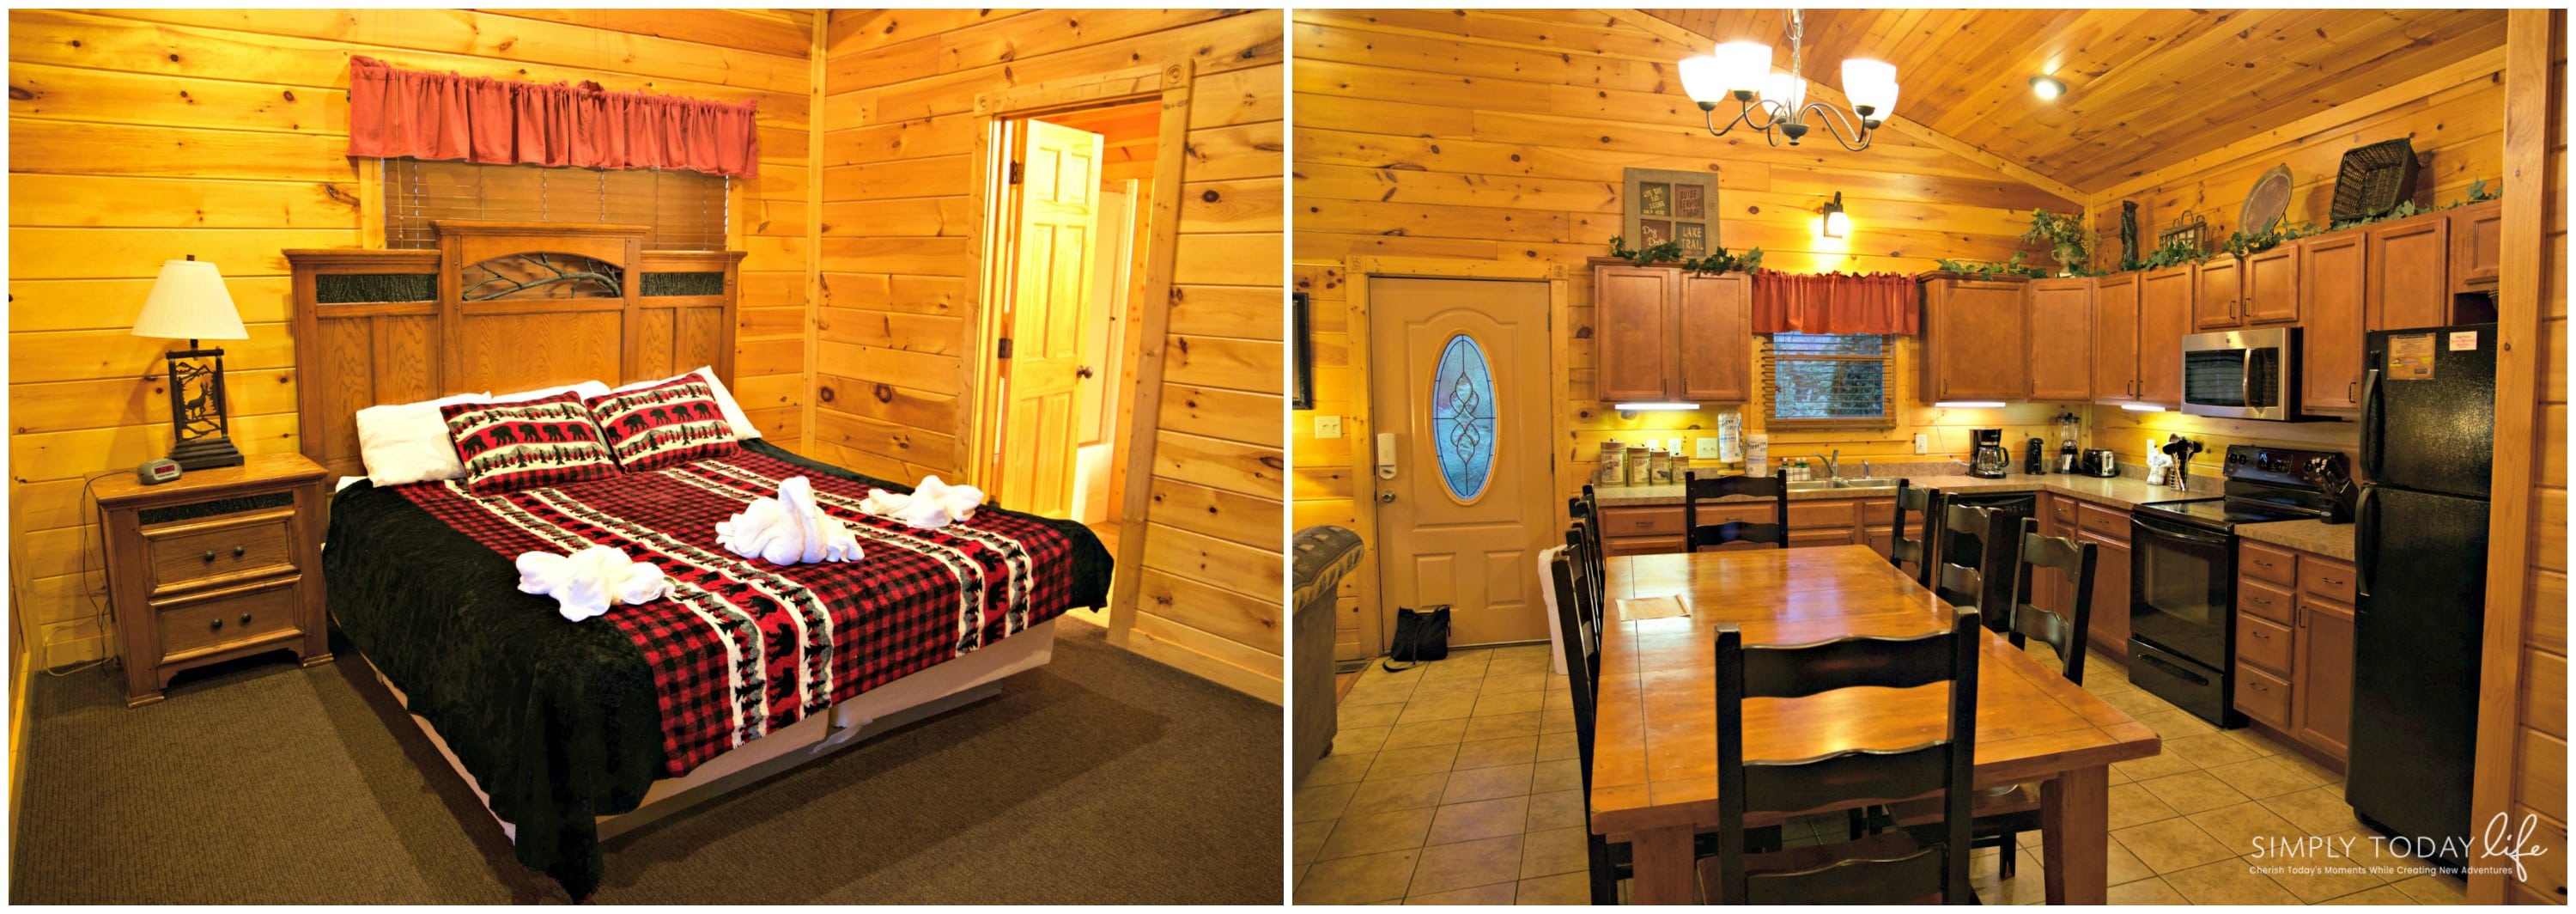 Best Cabins In Gatlinburg TN - Room Tour - simplytodaylife.com